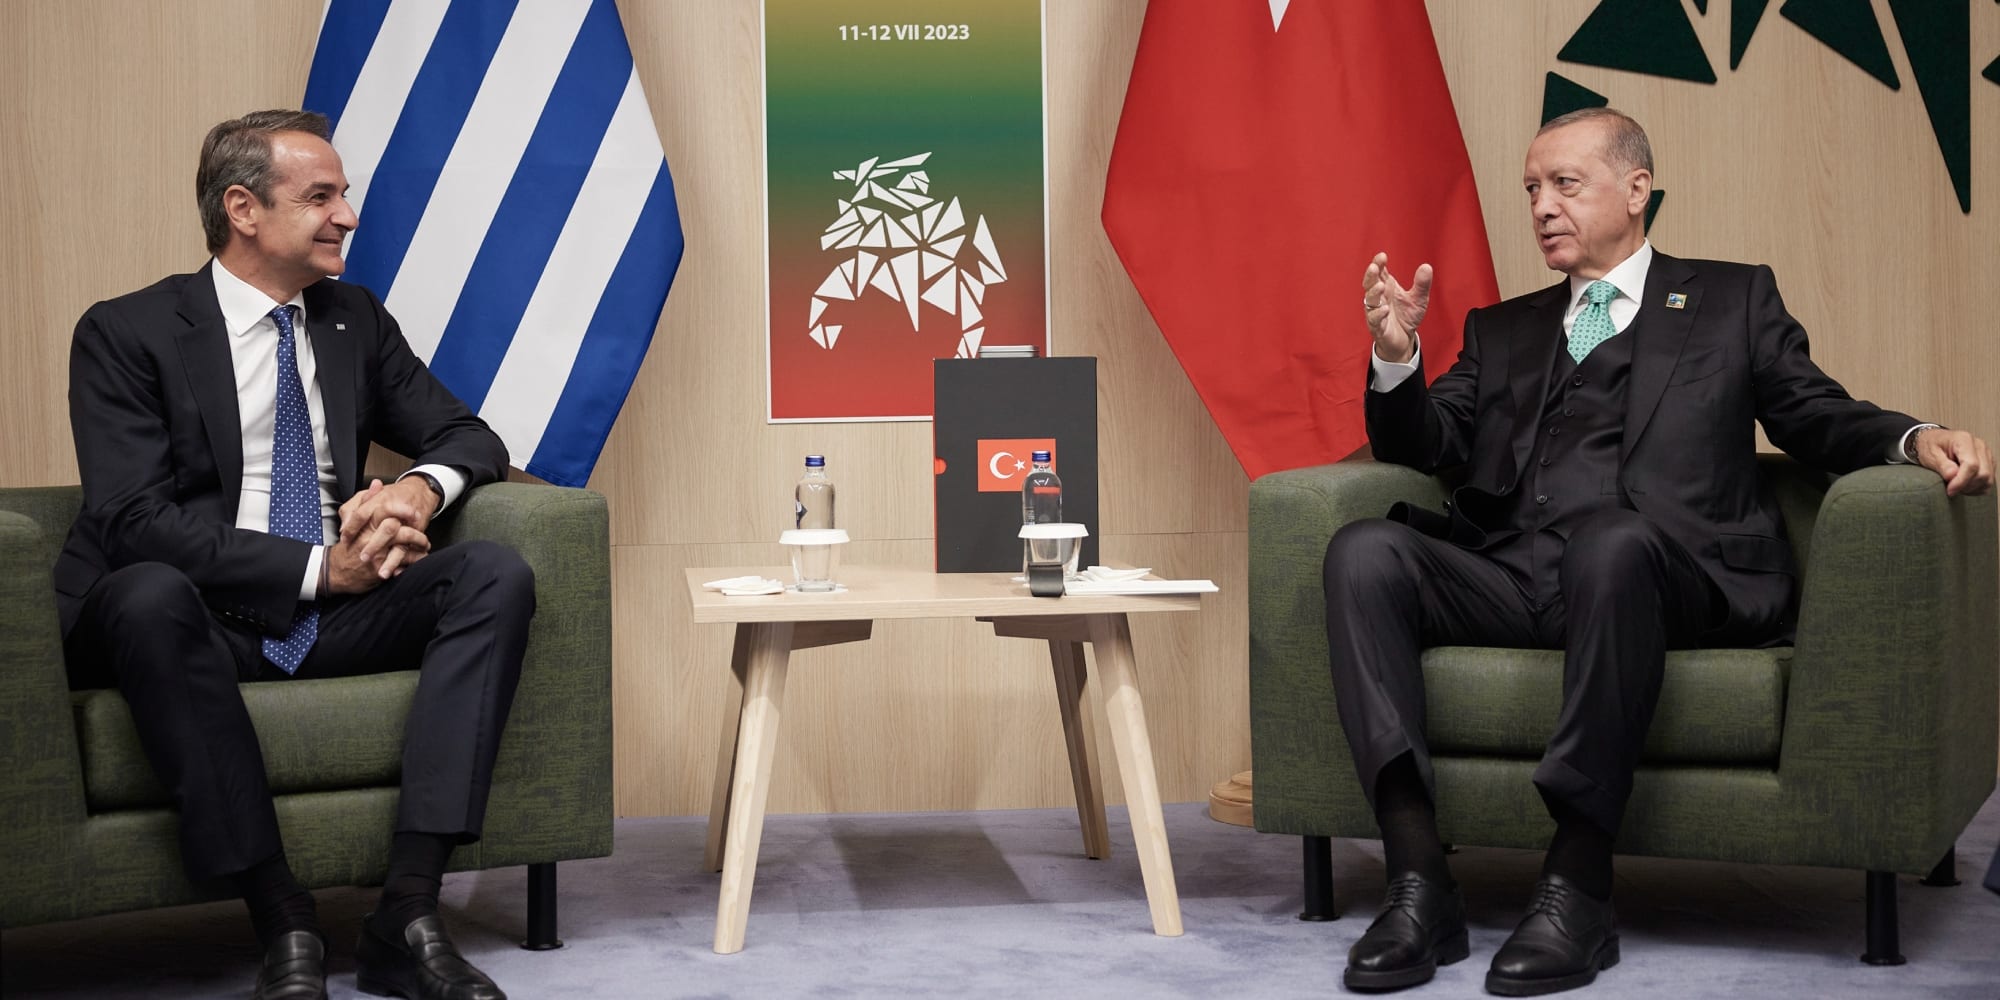 mitsotakis erdogan 1 - Κυβερνητικές πηγές: Στη συνάντηση του Κυριάκου Μητσοτάκη με τον Ρετζέπ Ταγίπ Ερντογάν έγινε μια ειλικρινής συζήτηση σε θετικό κλίμα